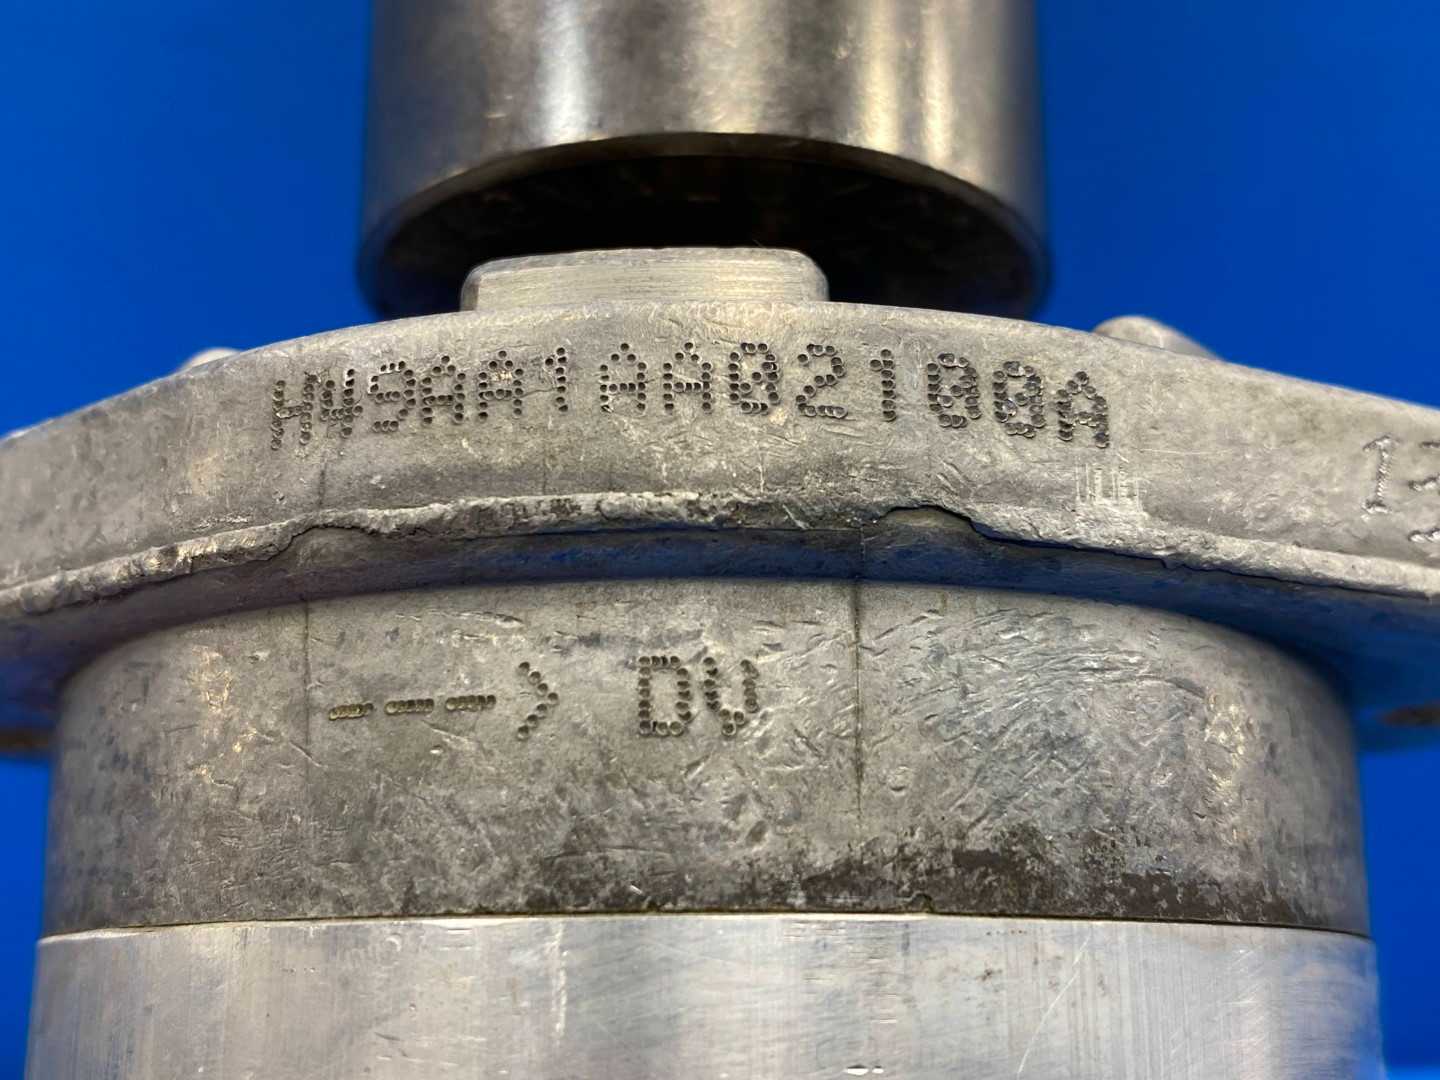 Parker Hydraulic Pump H49AA1AA02100A